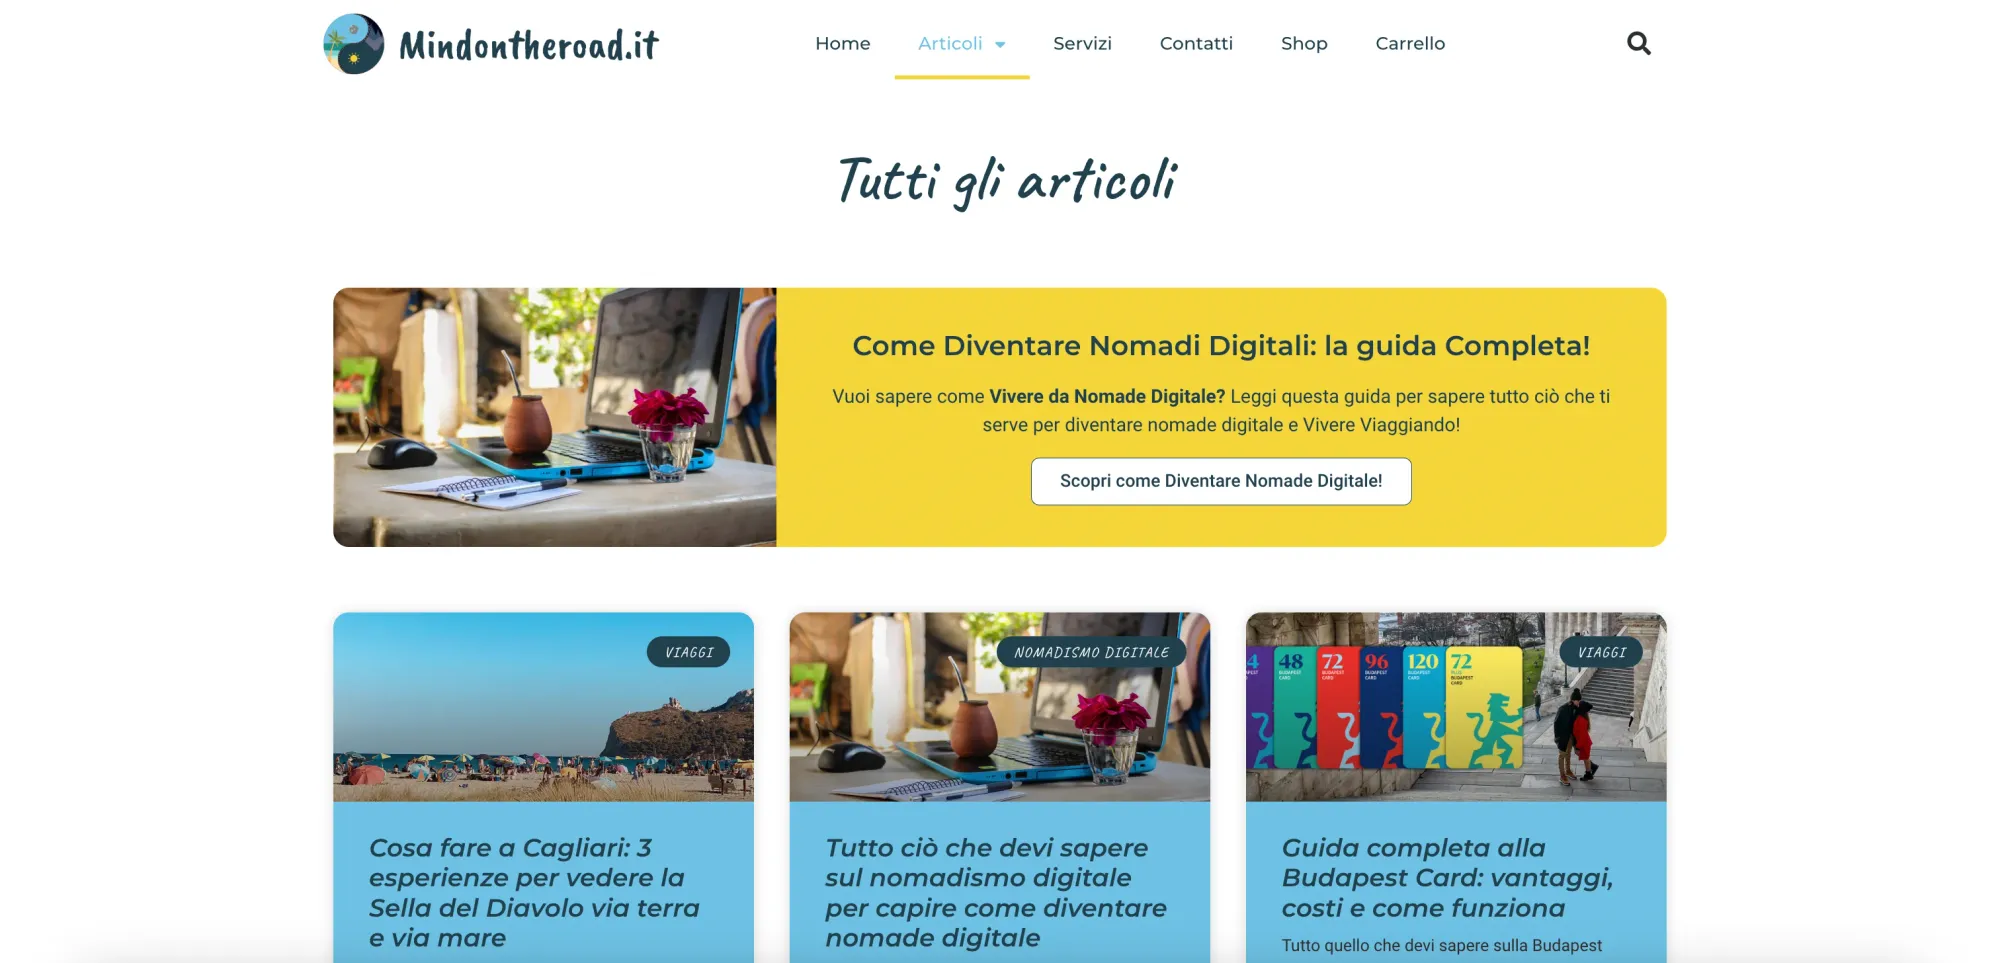 mindontheroad.it, un blog di un nomade digitale italiano